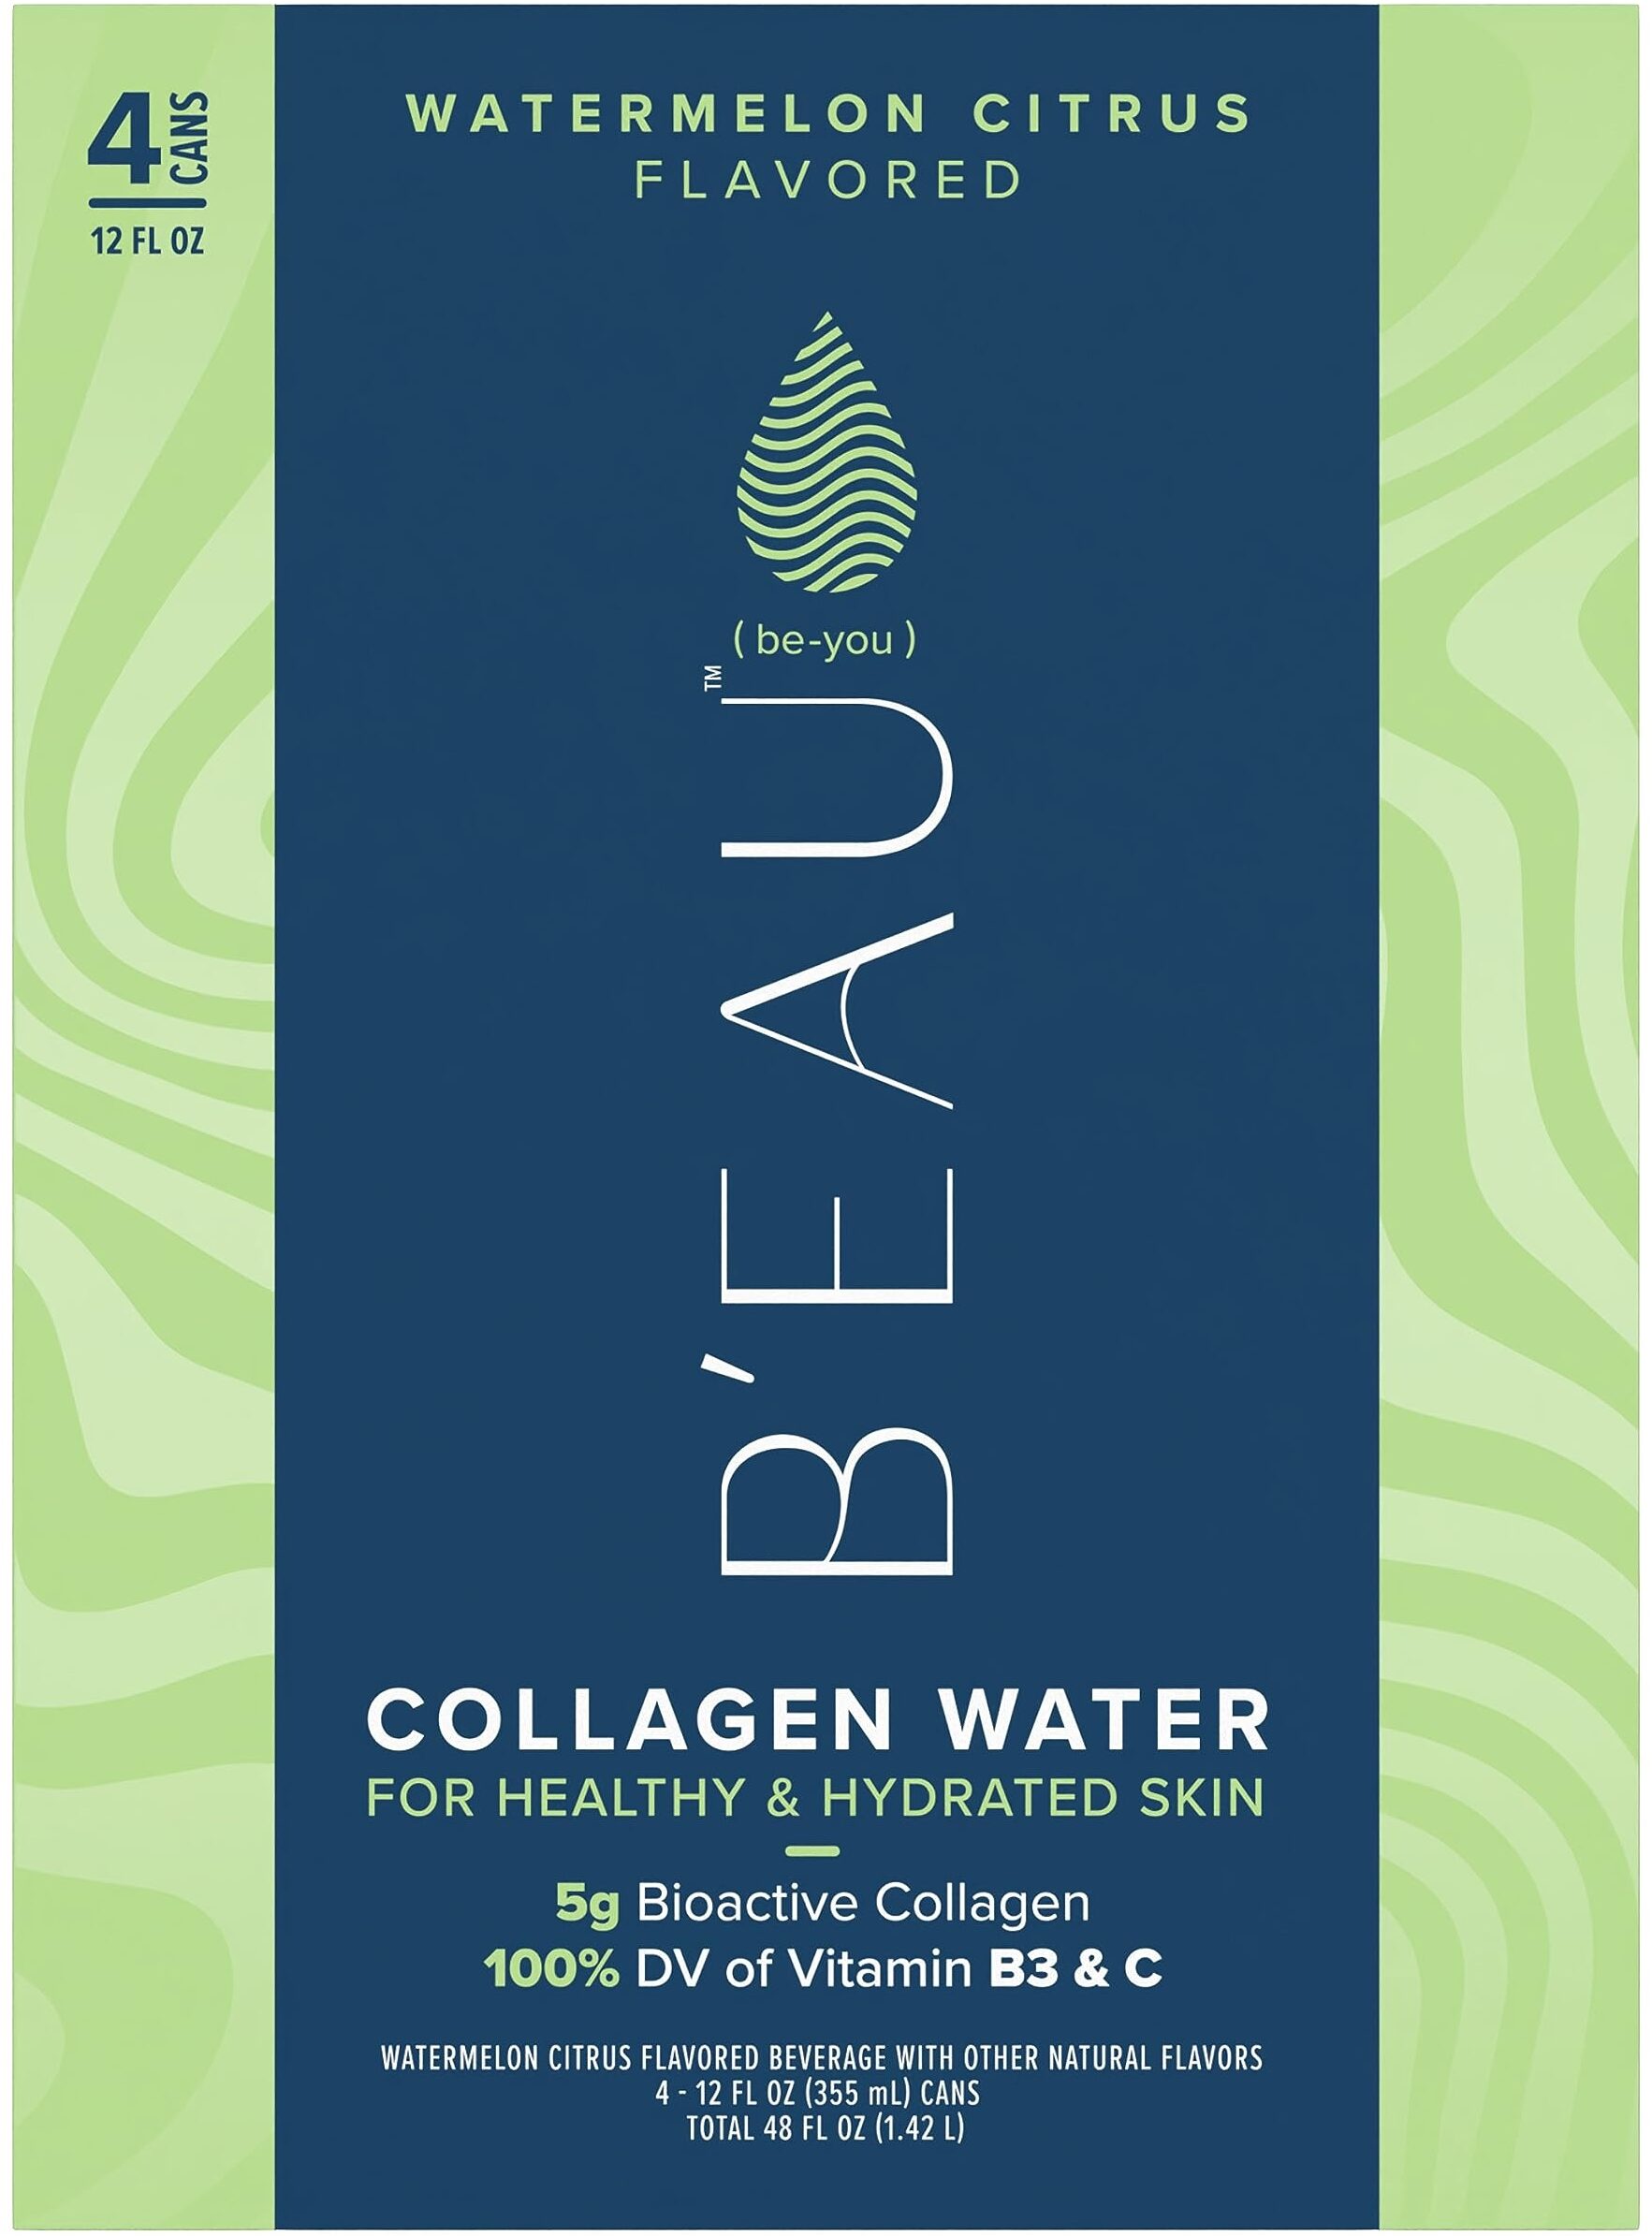 B'EAU Watermelon Citrus Collagen Water - Produkt - en